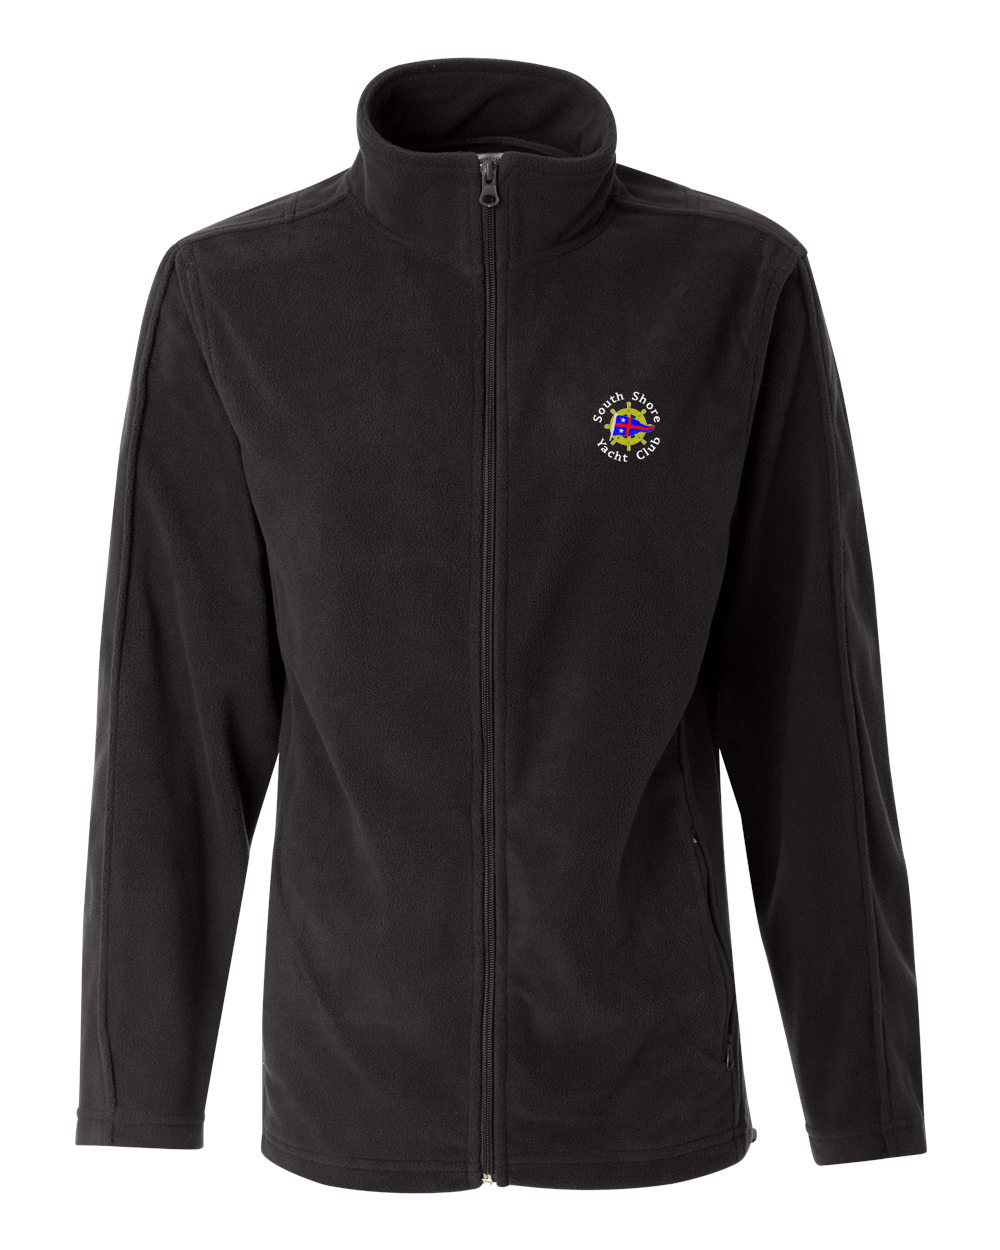 SSYC Logo Embroidered Women's Fleece Jacket Black